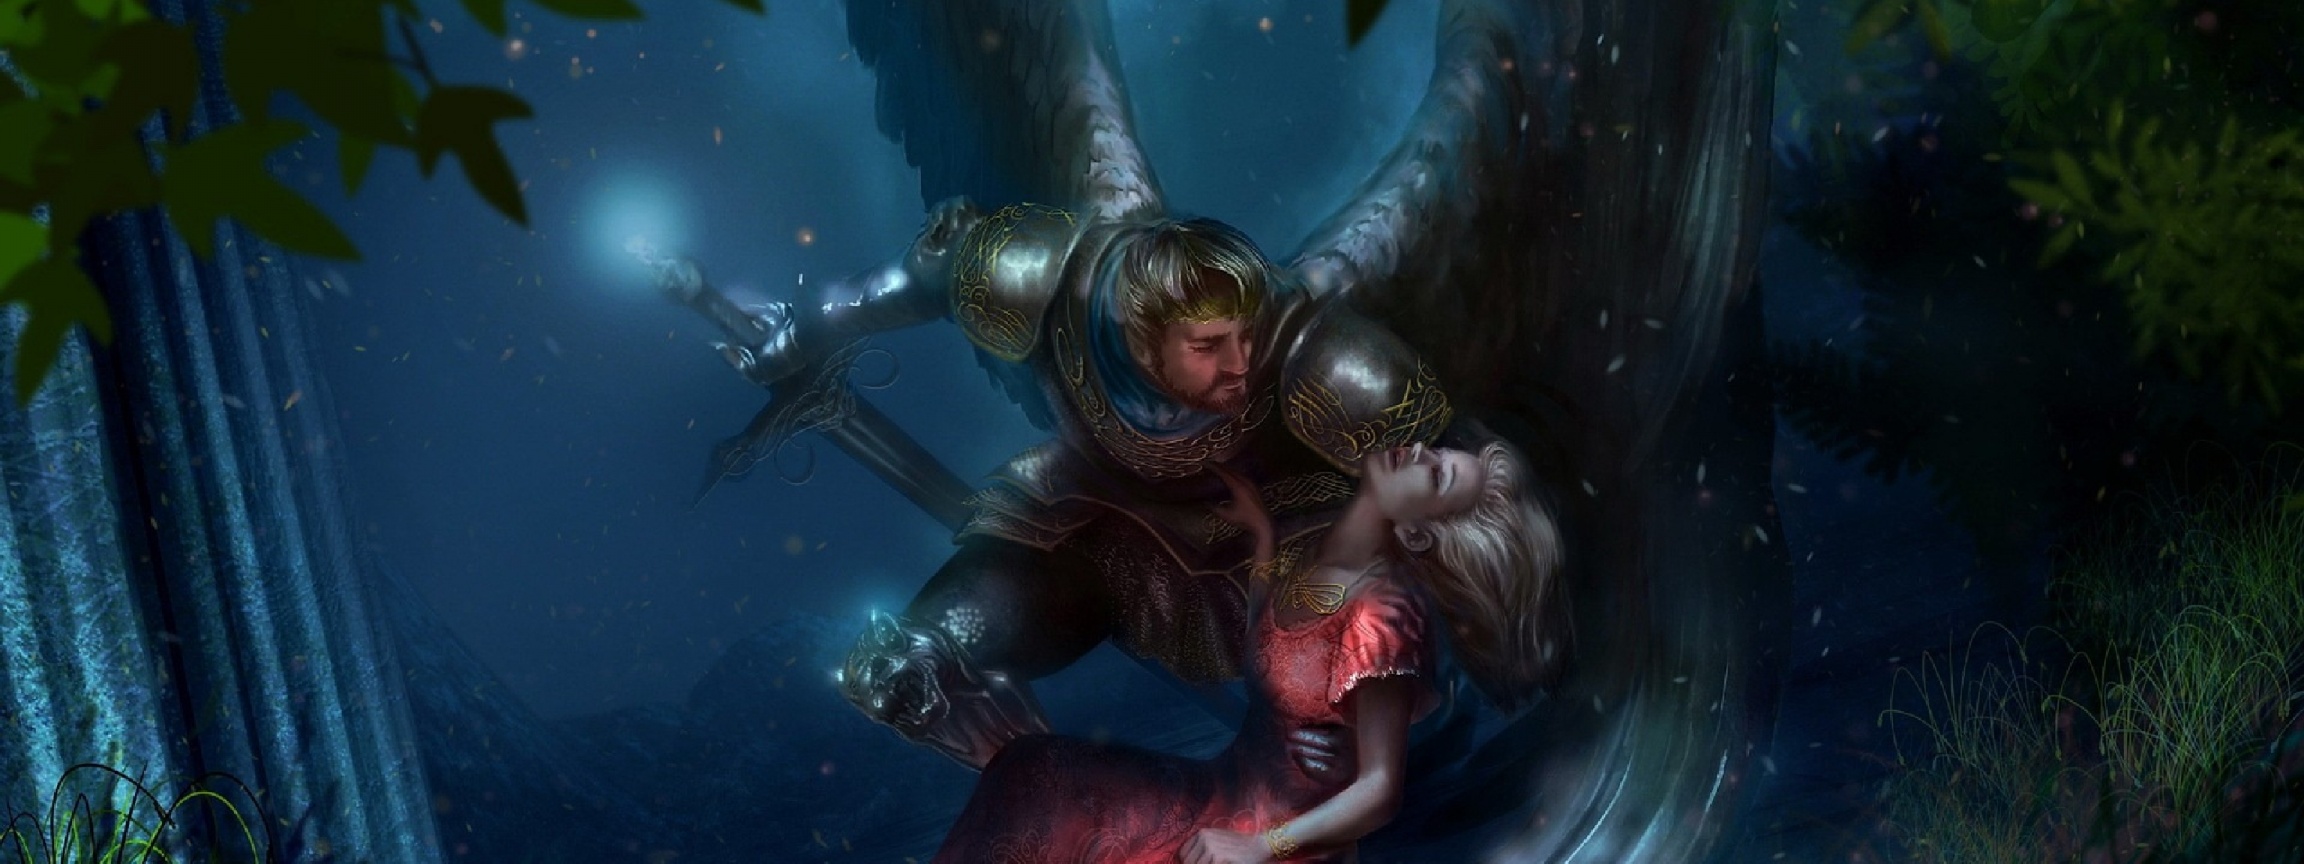 Angel Warrior Helps The Girl